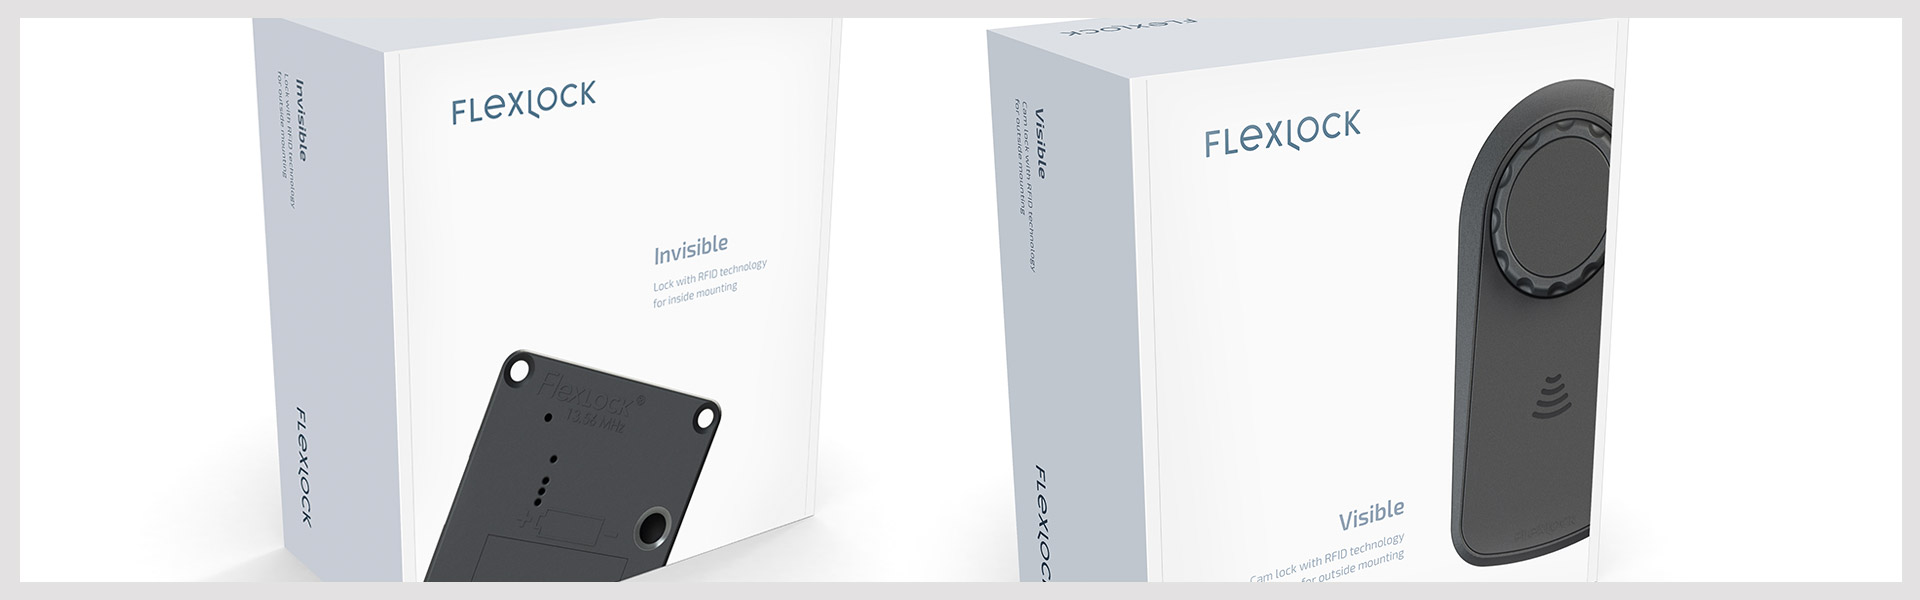 Flexlock produktboxar